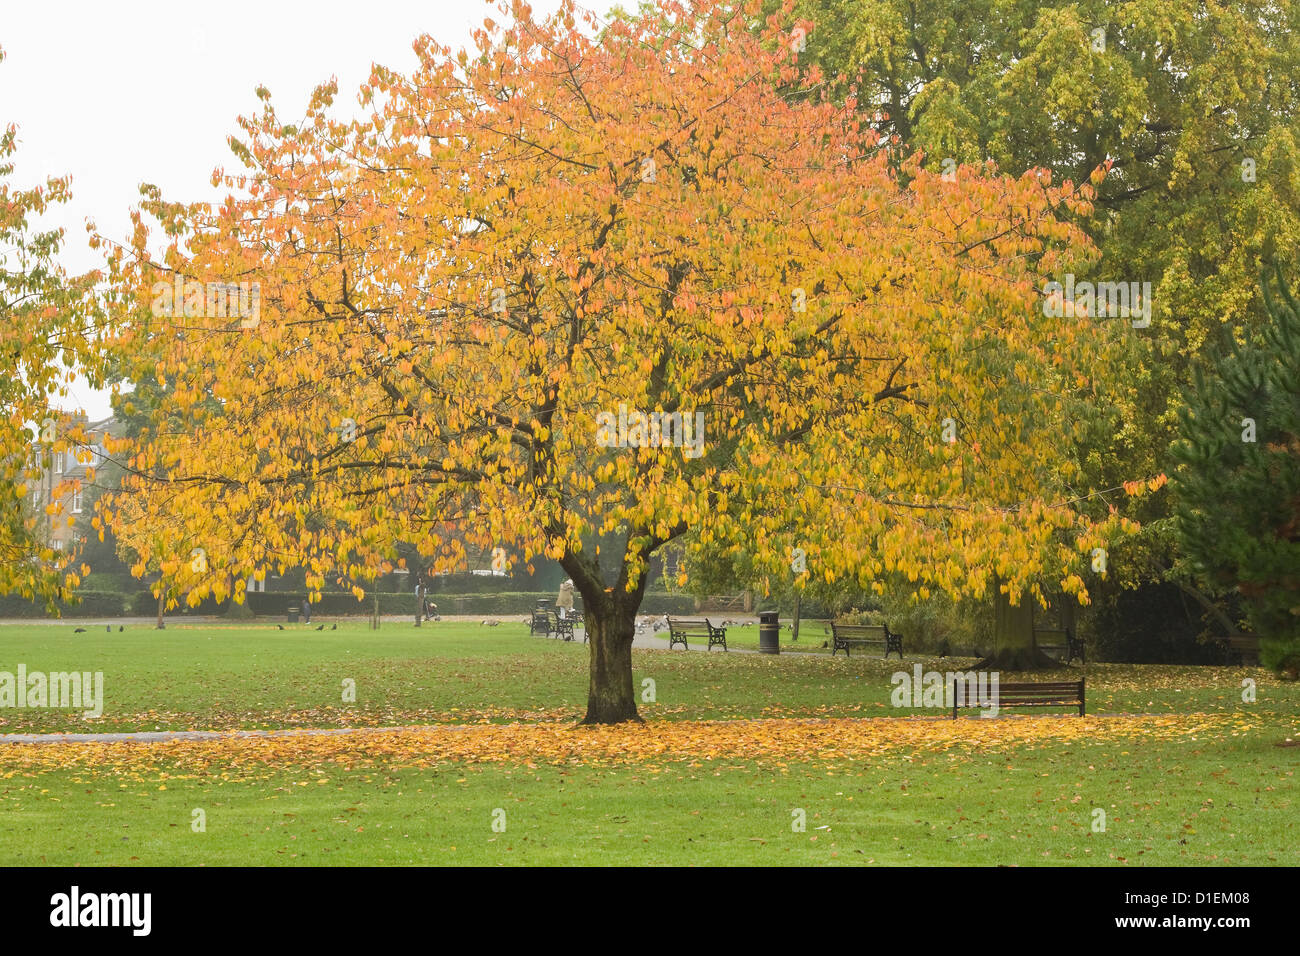 Baum im Herbst Farben, 2012 in Springfield Park, Hackney, London, UK. Stockfoto